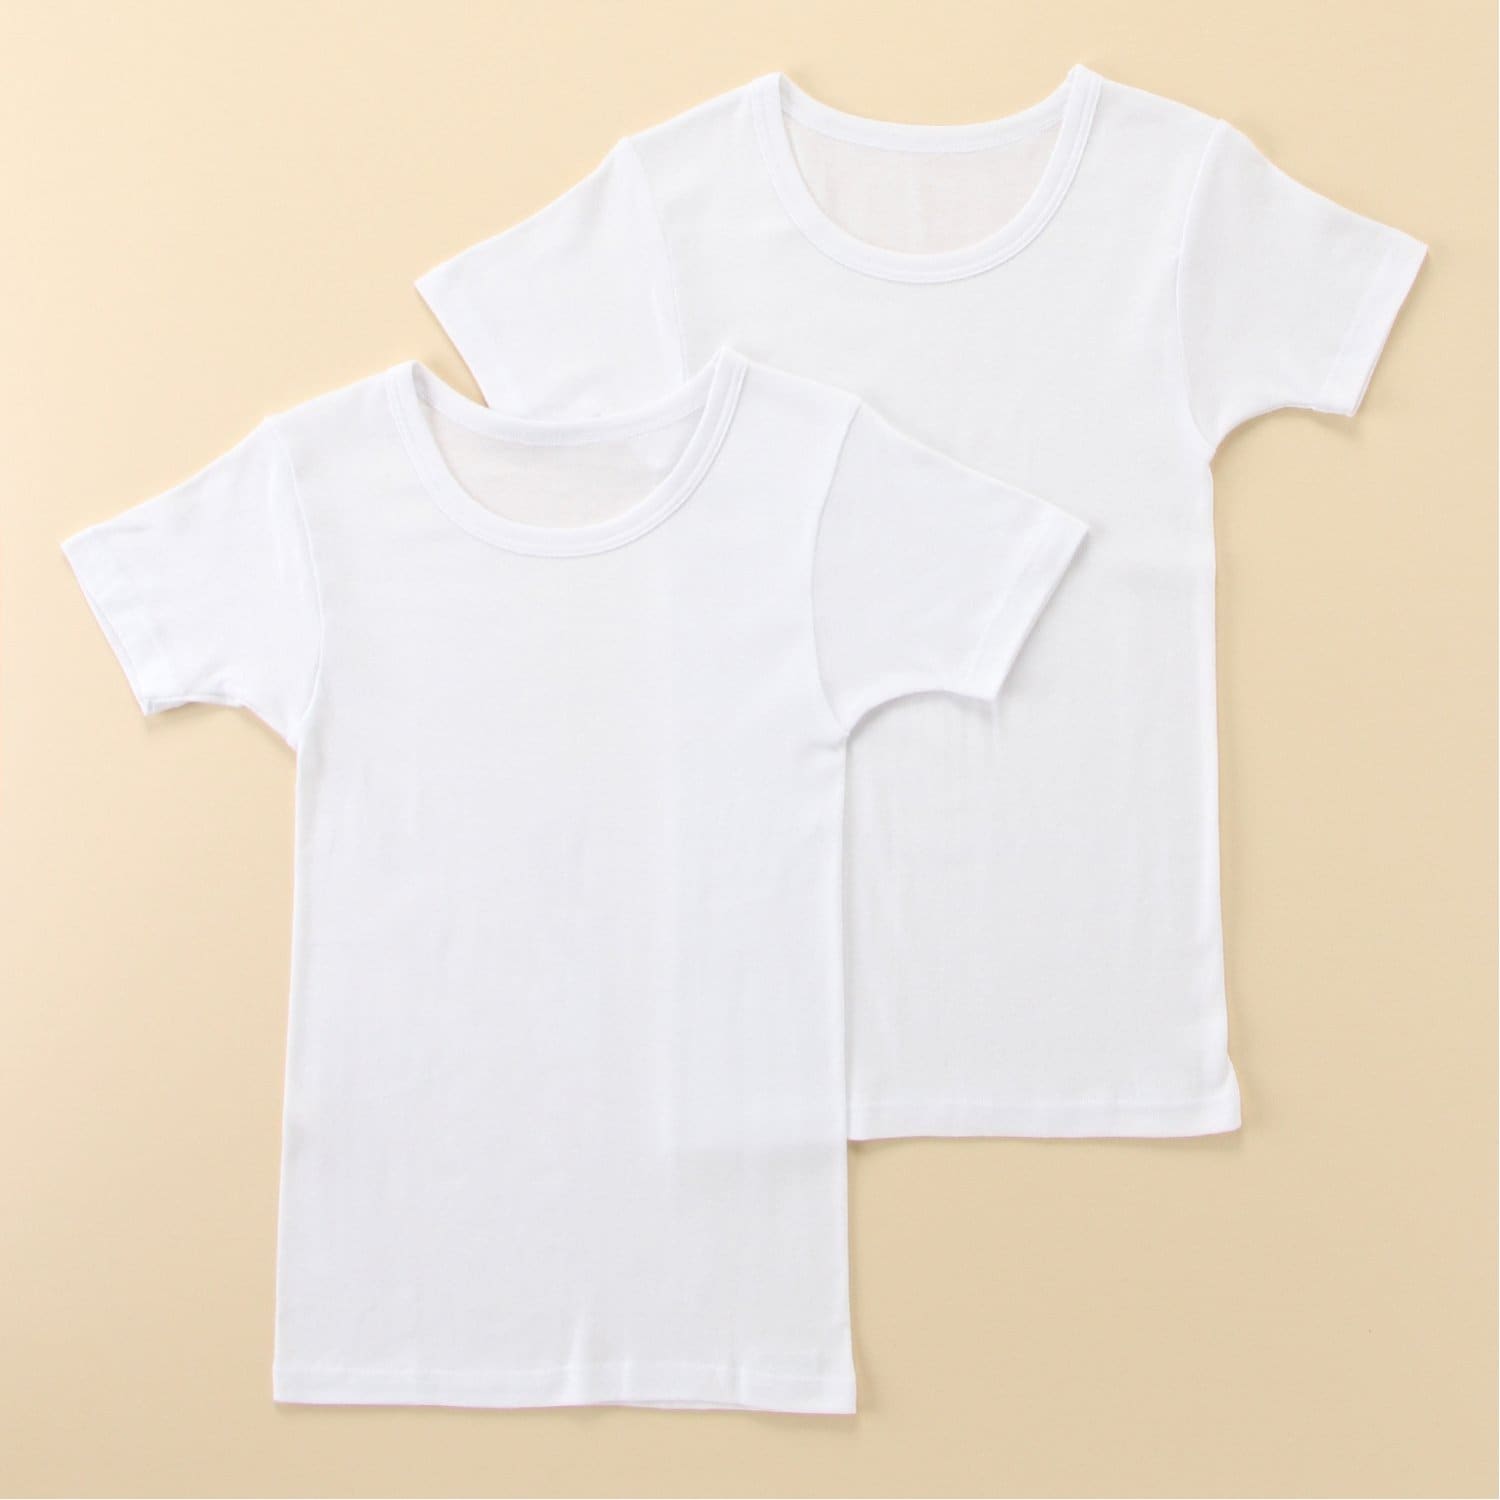 【SOKY】抗菌防臭脇すっきり無縫製 綿素材半袖Tシャツ2枚組【ジュニア肌着】画像